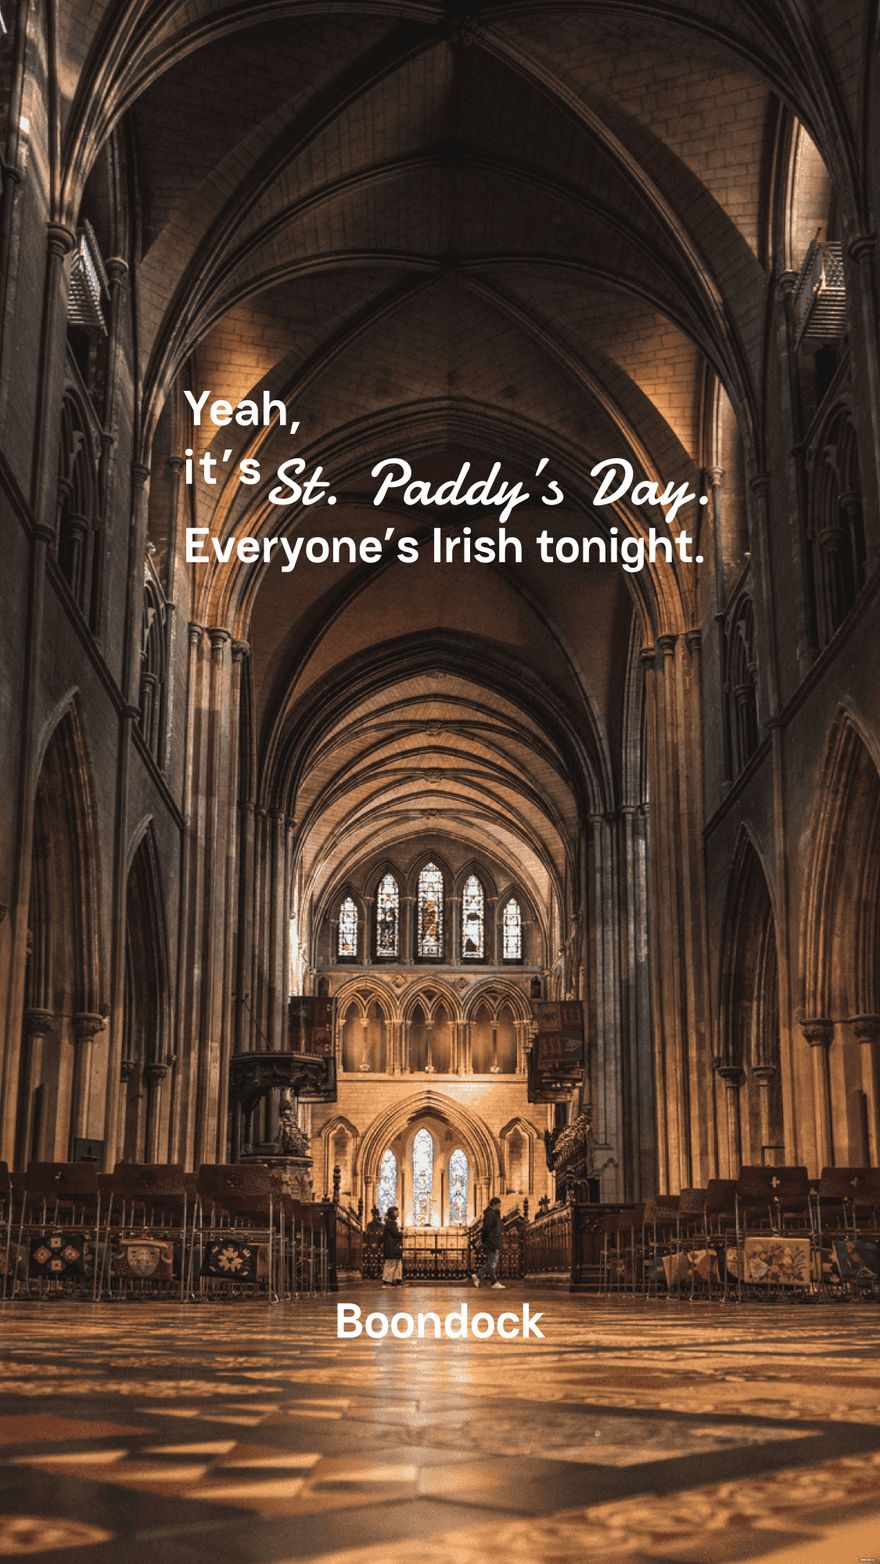 Free Boondock - Yeah, it’s St. Paddy’s Day. Everyone’s Irish tonight. in JPEG